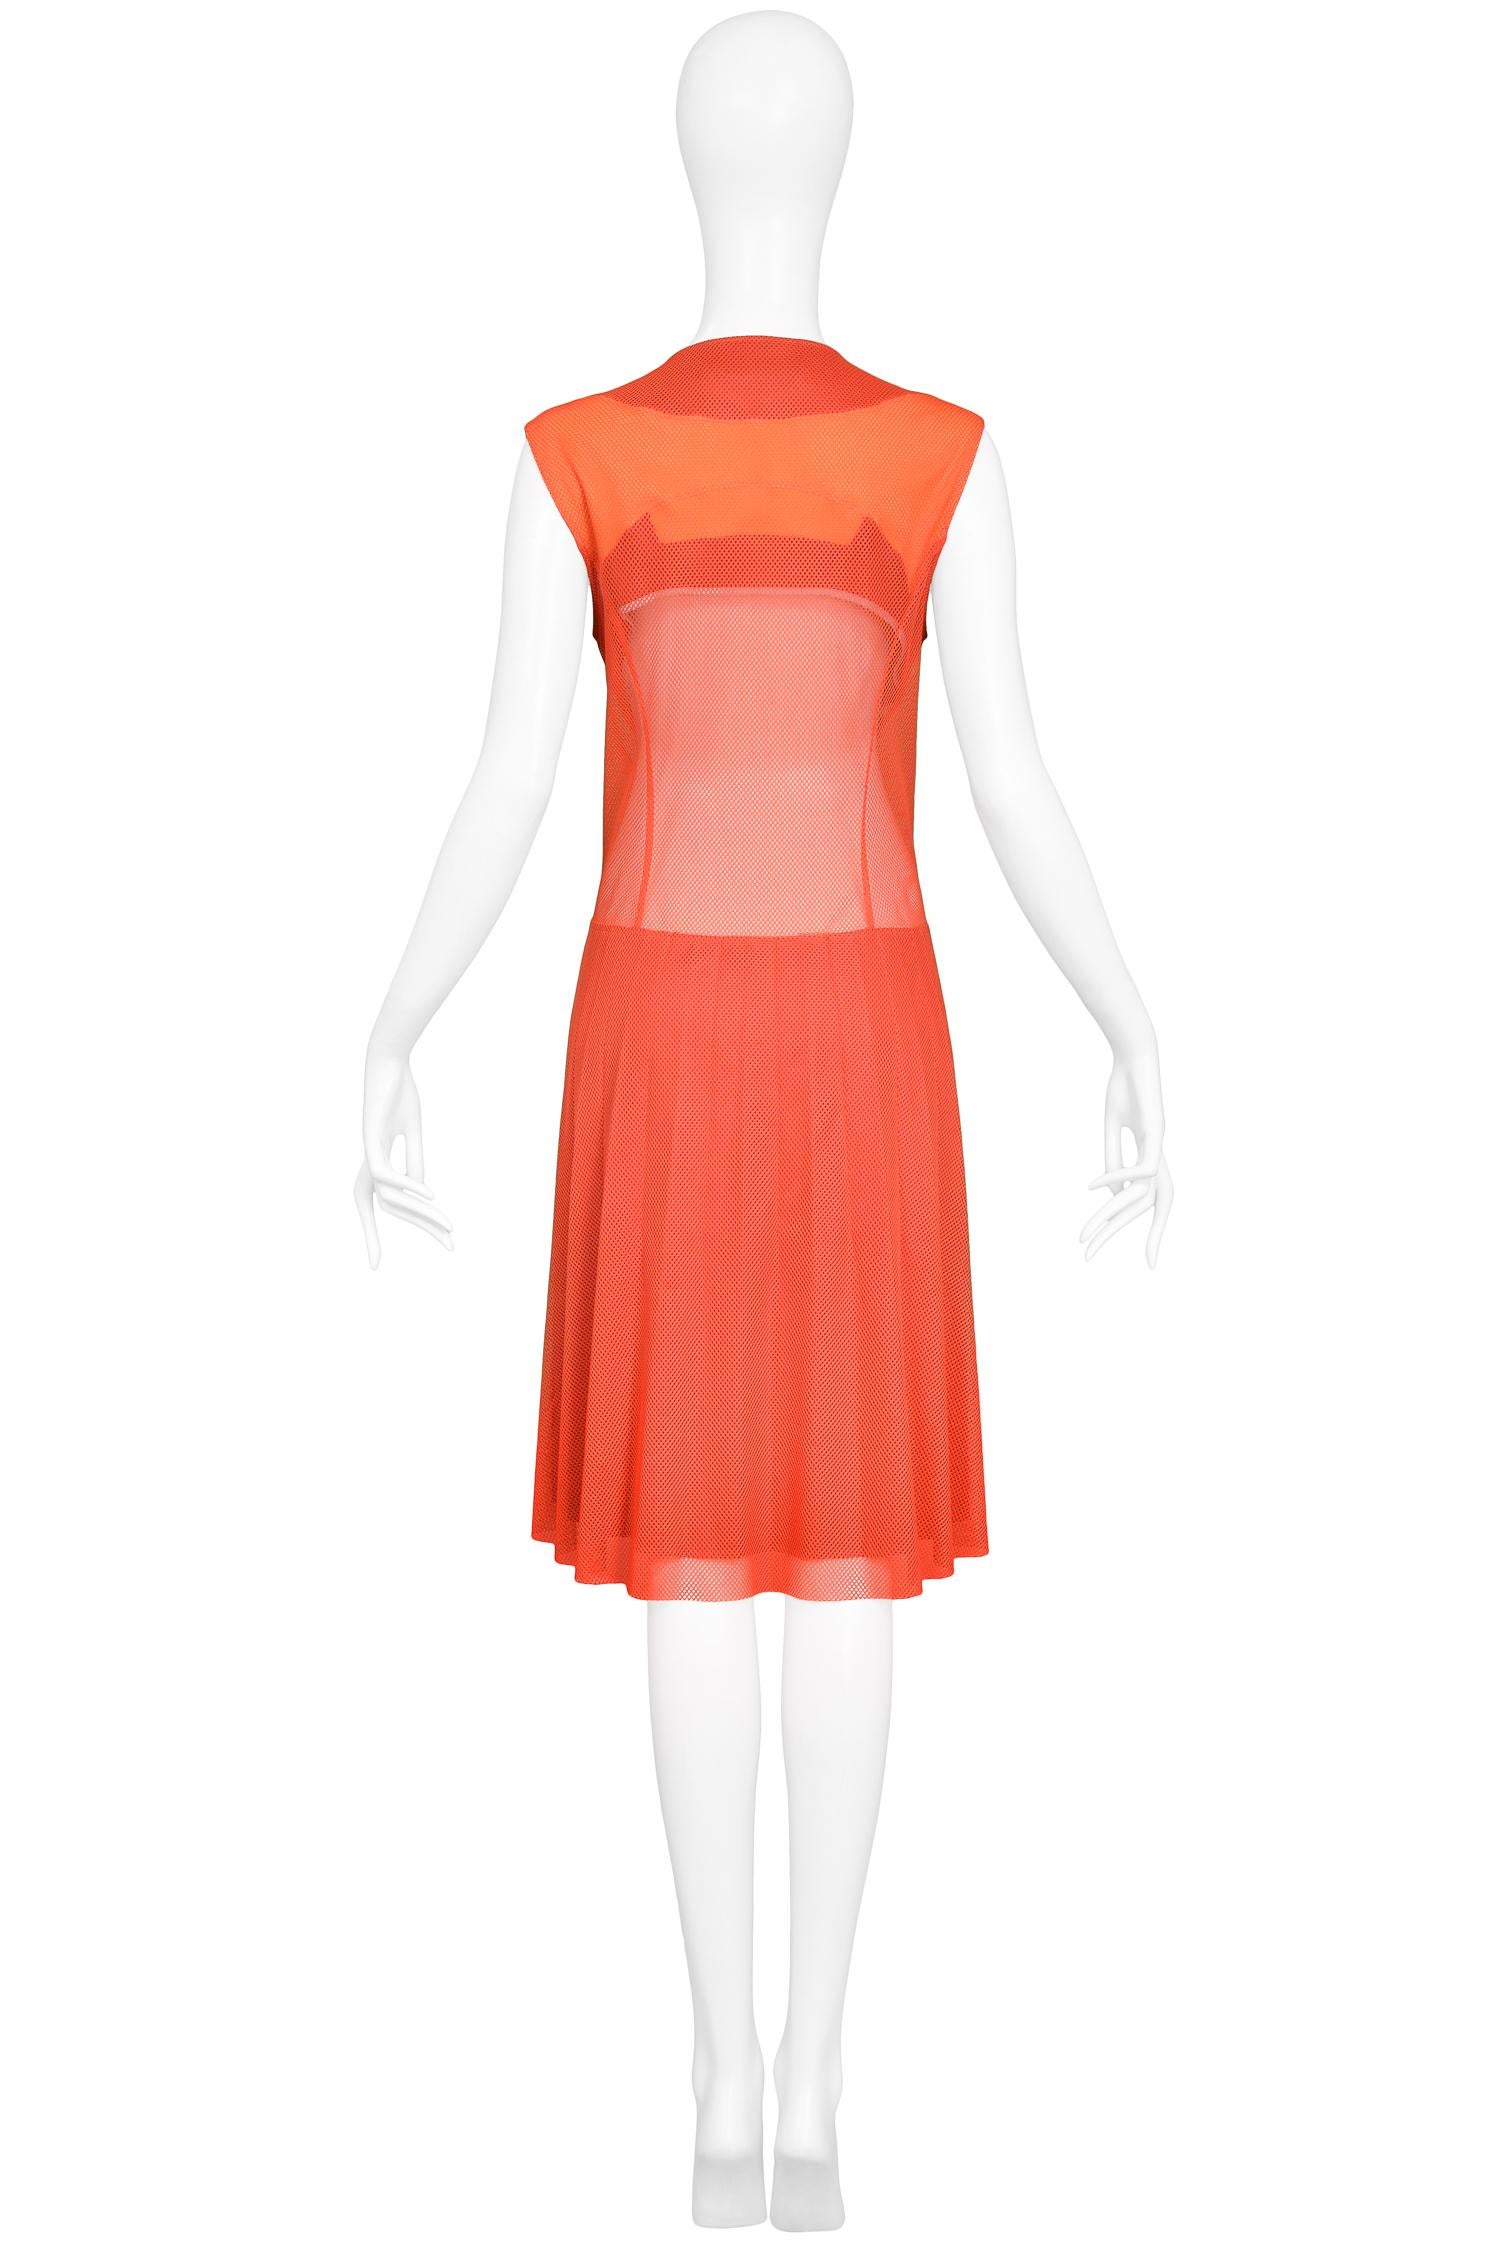 Women's Junya Watanabe 2012 Orange & Red Athletic Dress